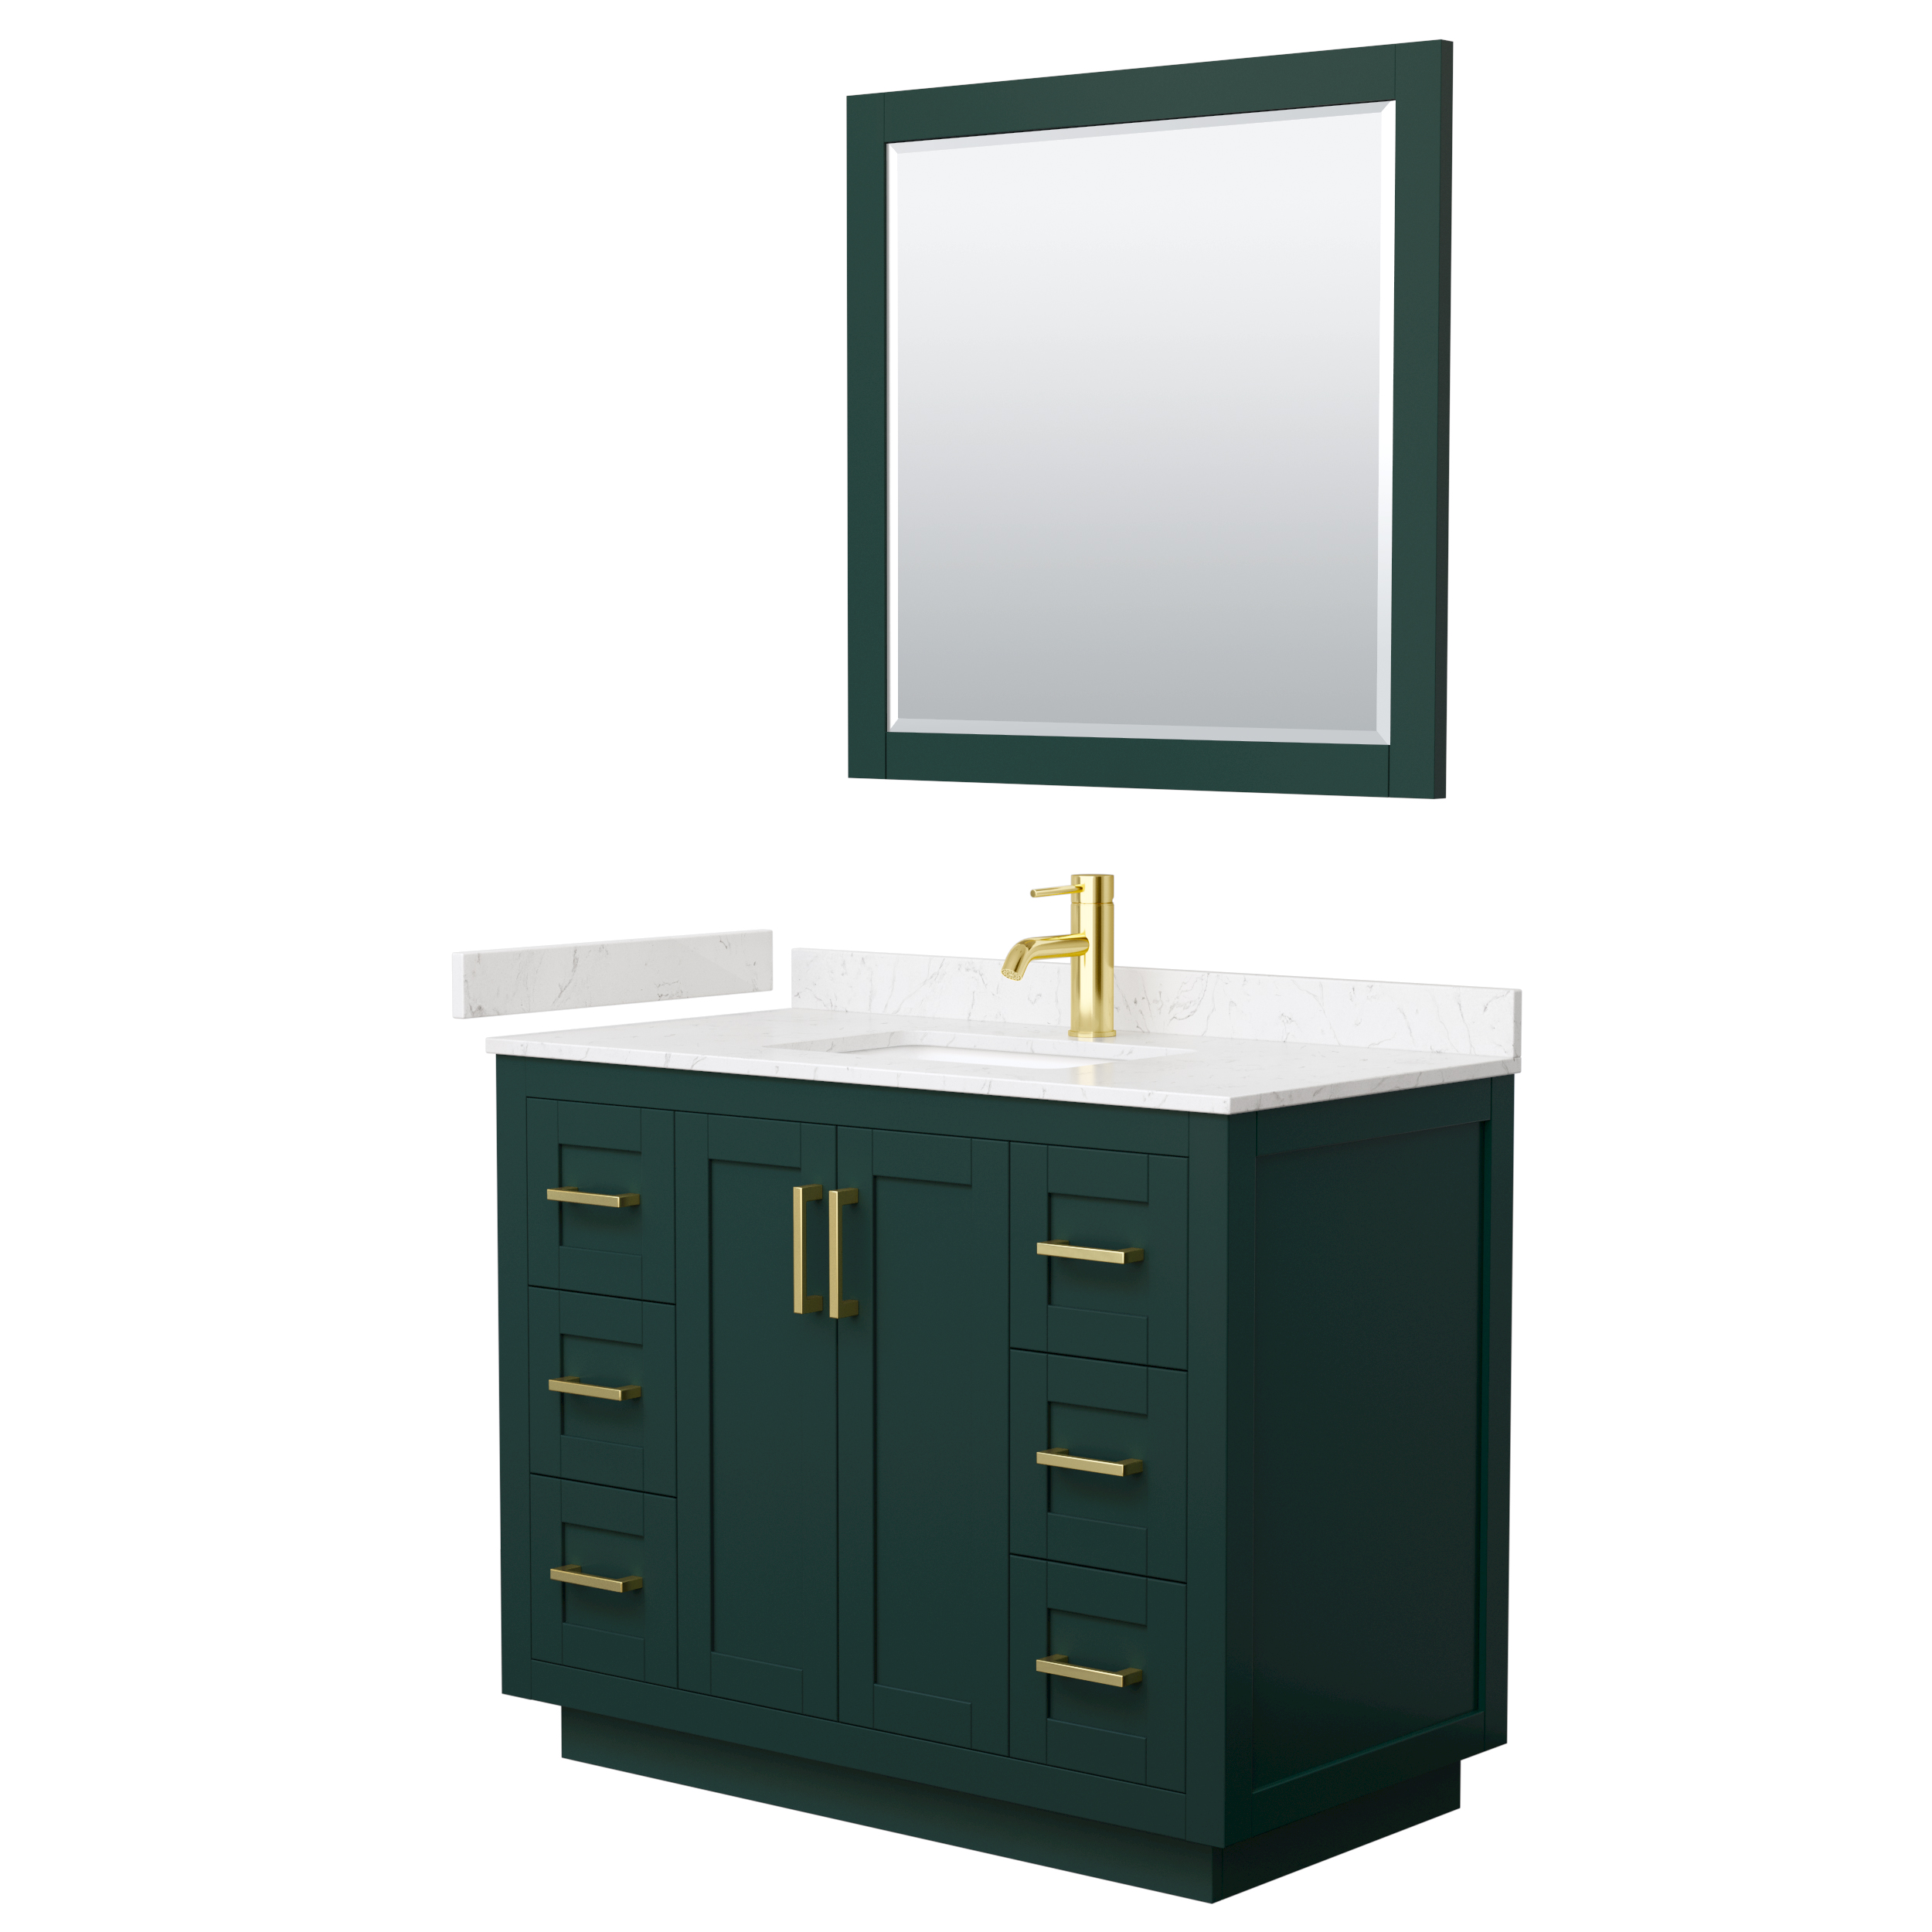 Miranda 42" Single Vanity with Cultured Marble Counter - Green WC-2929-42-SGL-VAN-GRN-